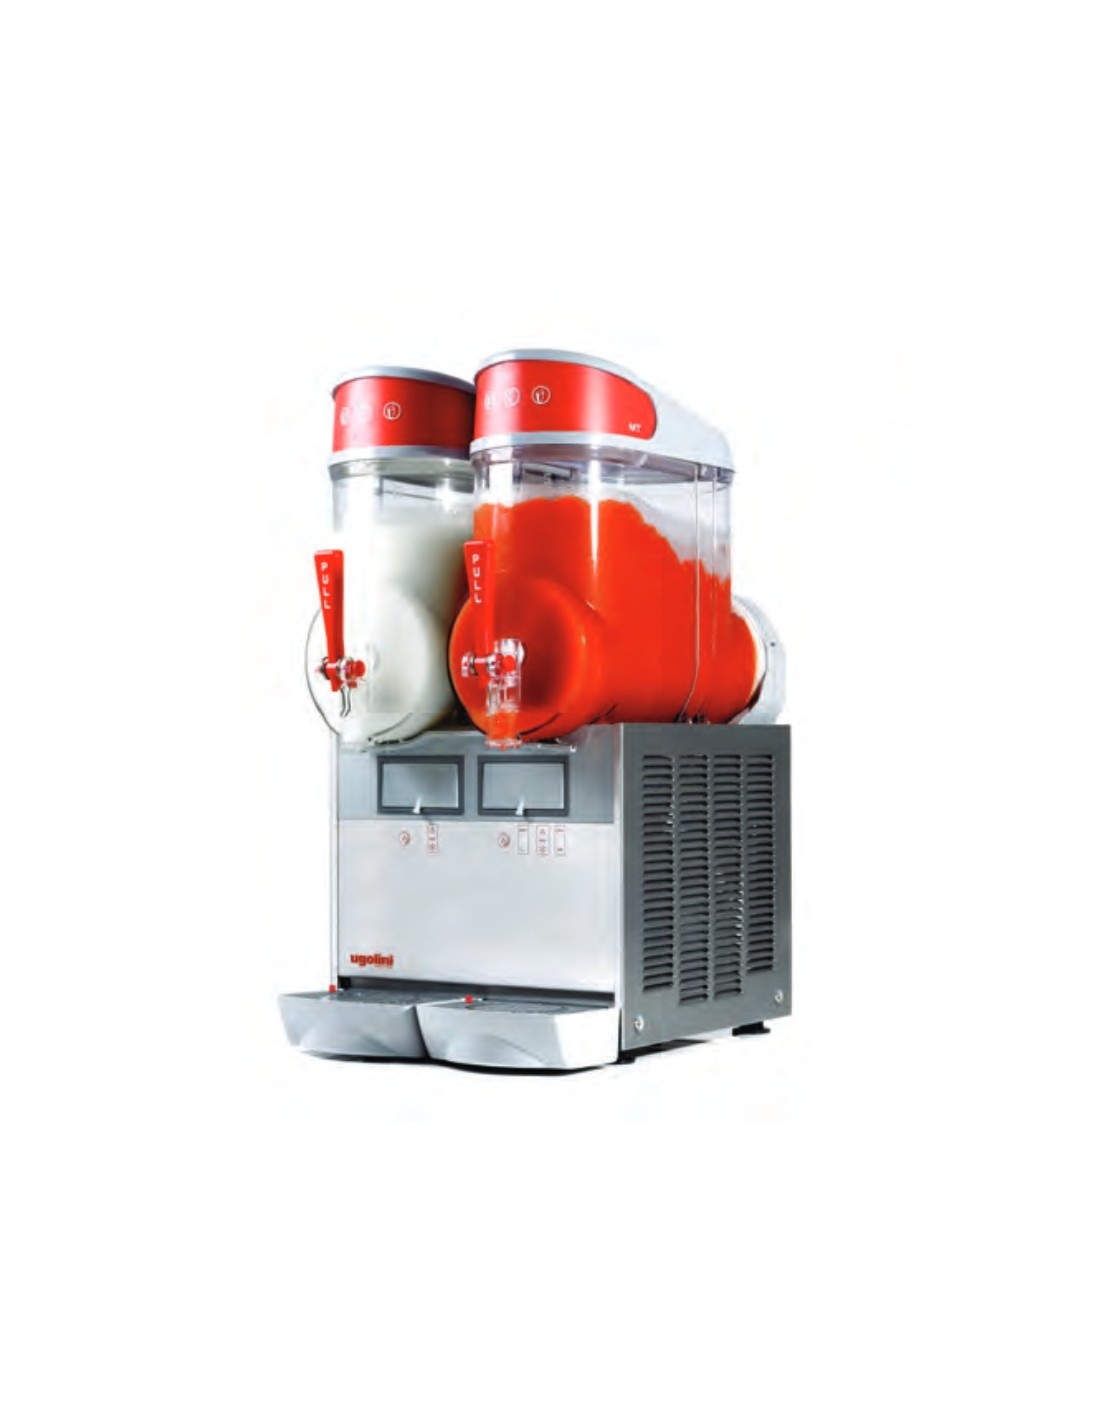 Distributore erogatore di bevande fredde per bar 2 Vasche Lt 5+5 - Linea  freddo - Refrigerazione professionale - Distributori di